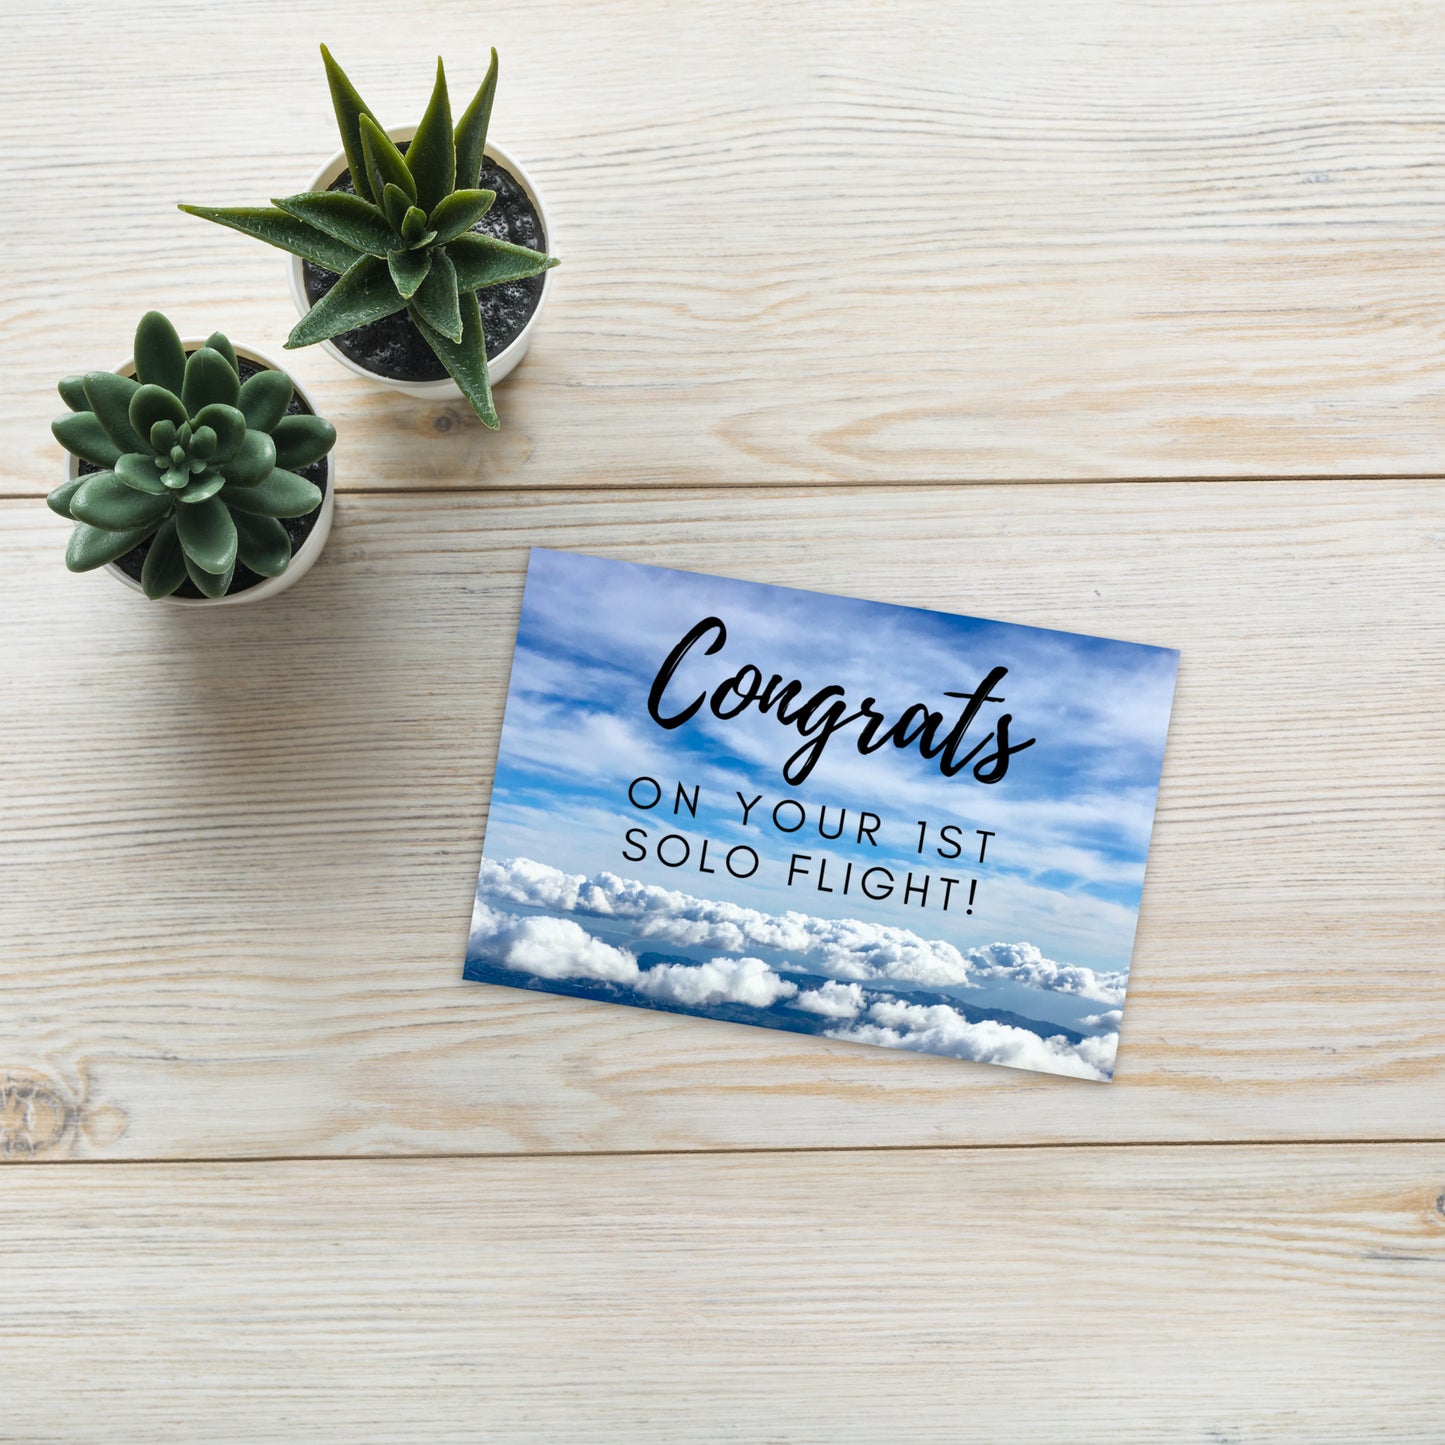 Congrats on your 1st Solo Flight! - postcard (sky)